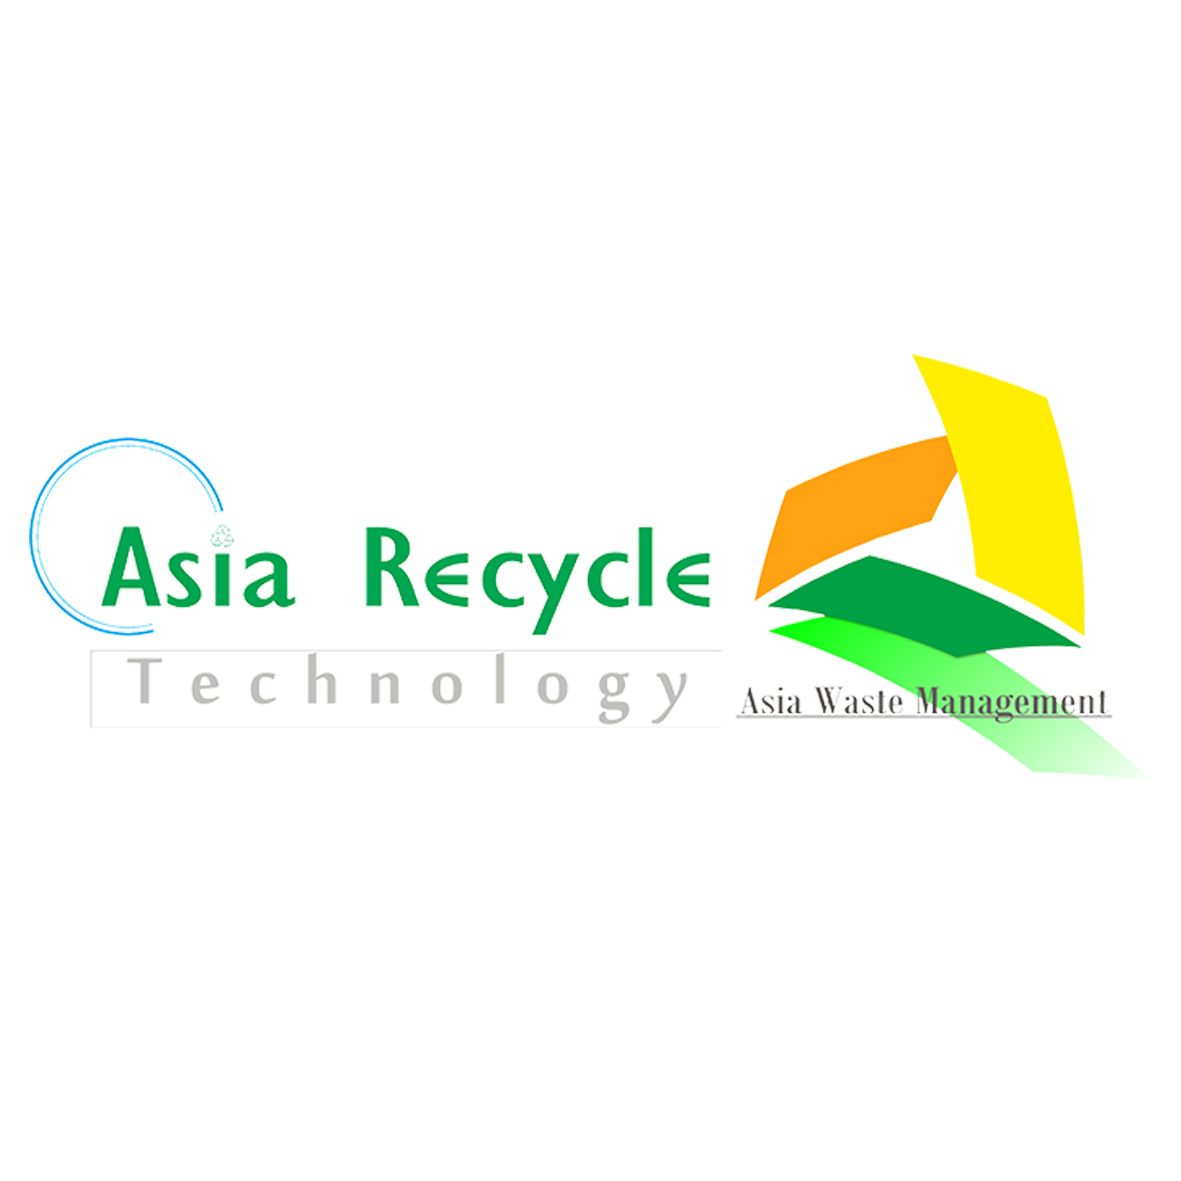 Asia Recycle - Fleet